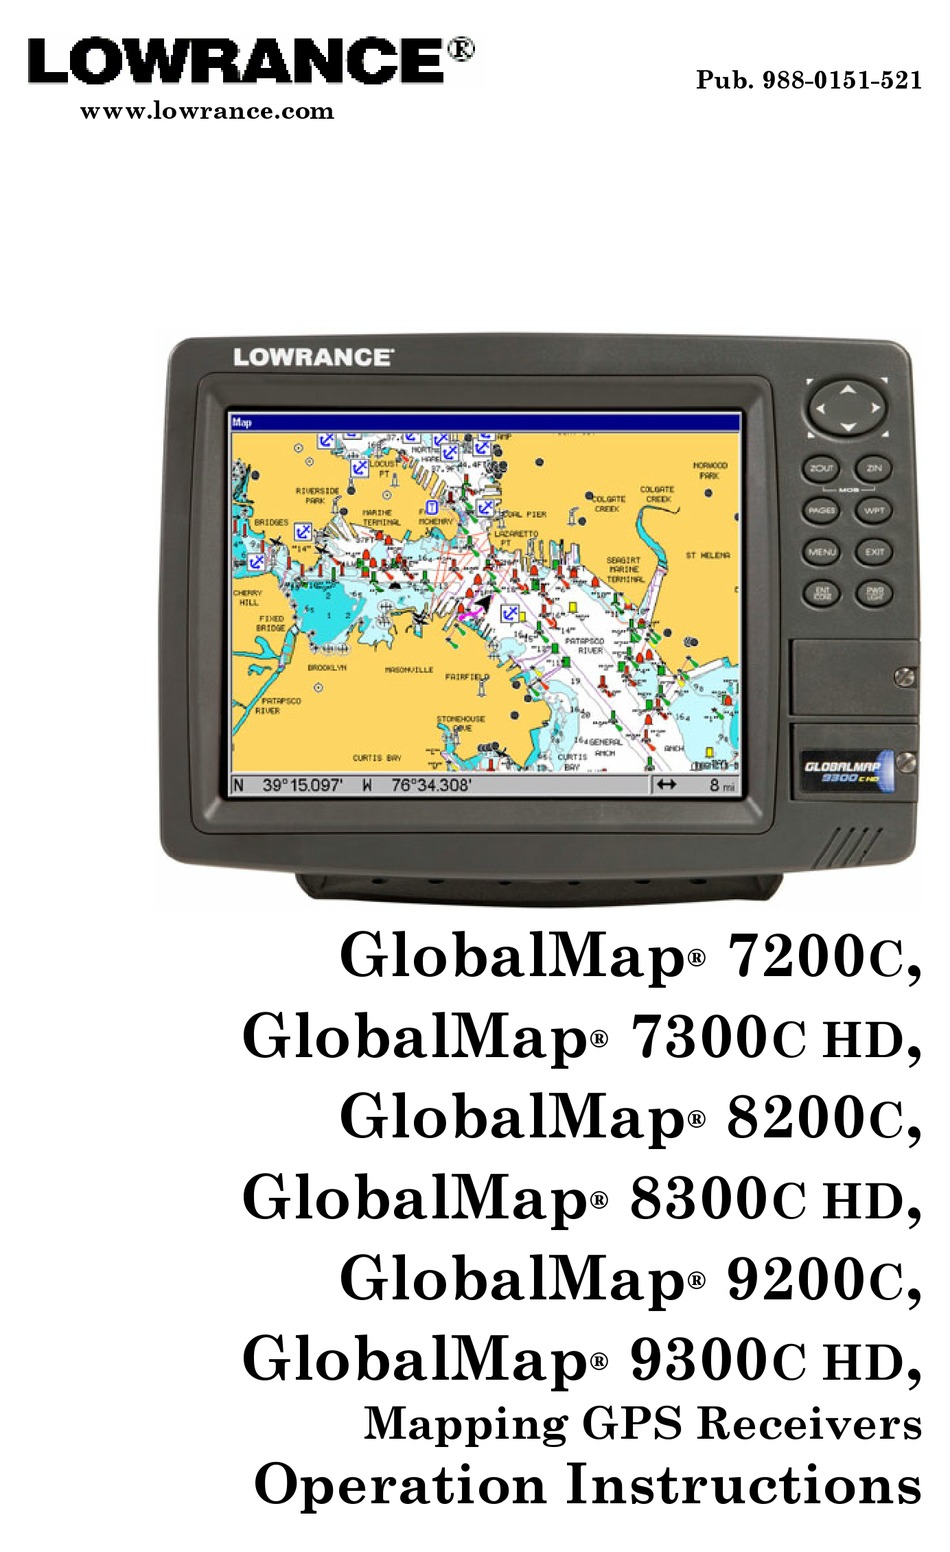 LOWRANCE GLOBALMAP 5300C iGPS Fish Finder GPS in inside 